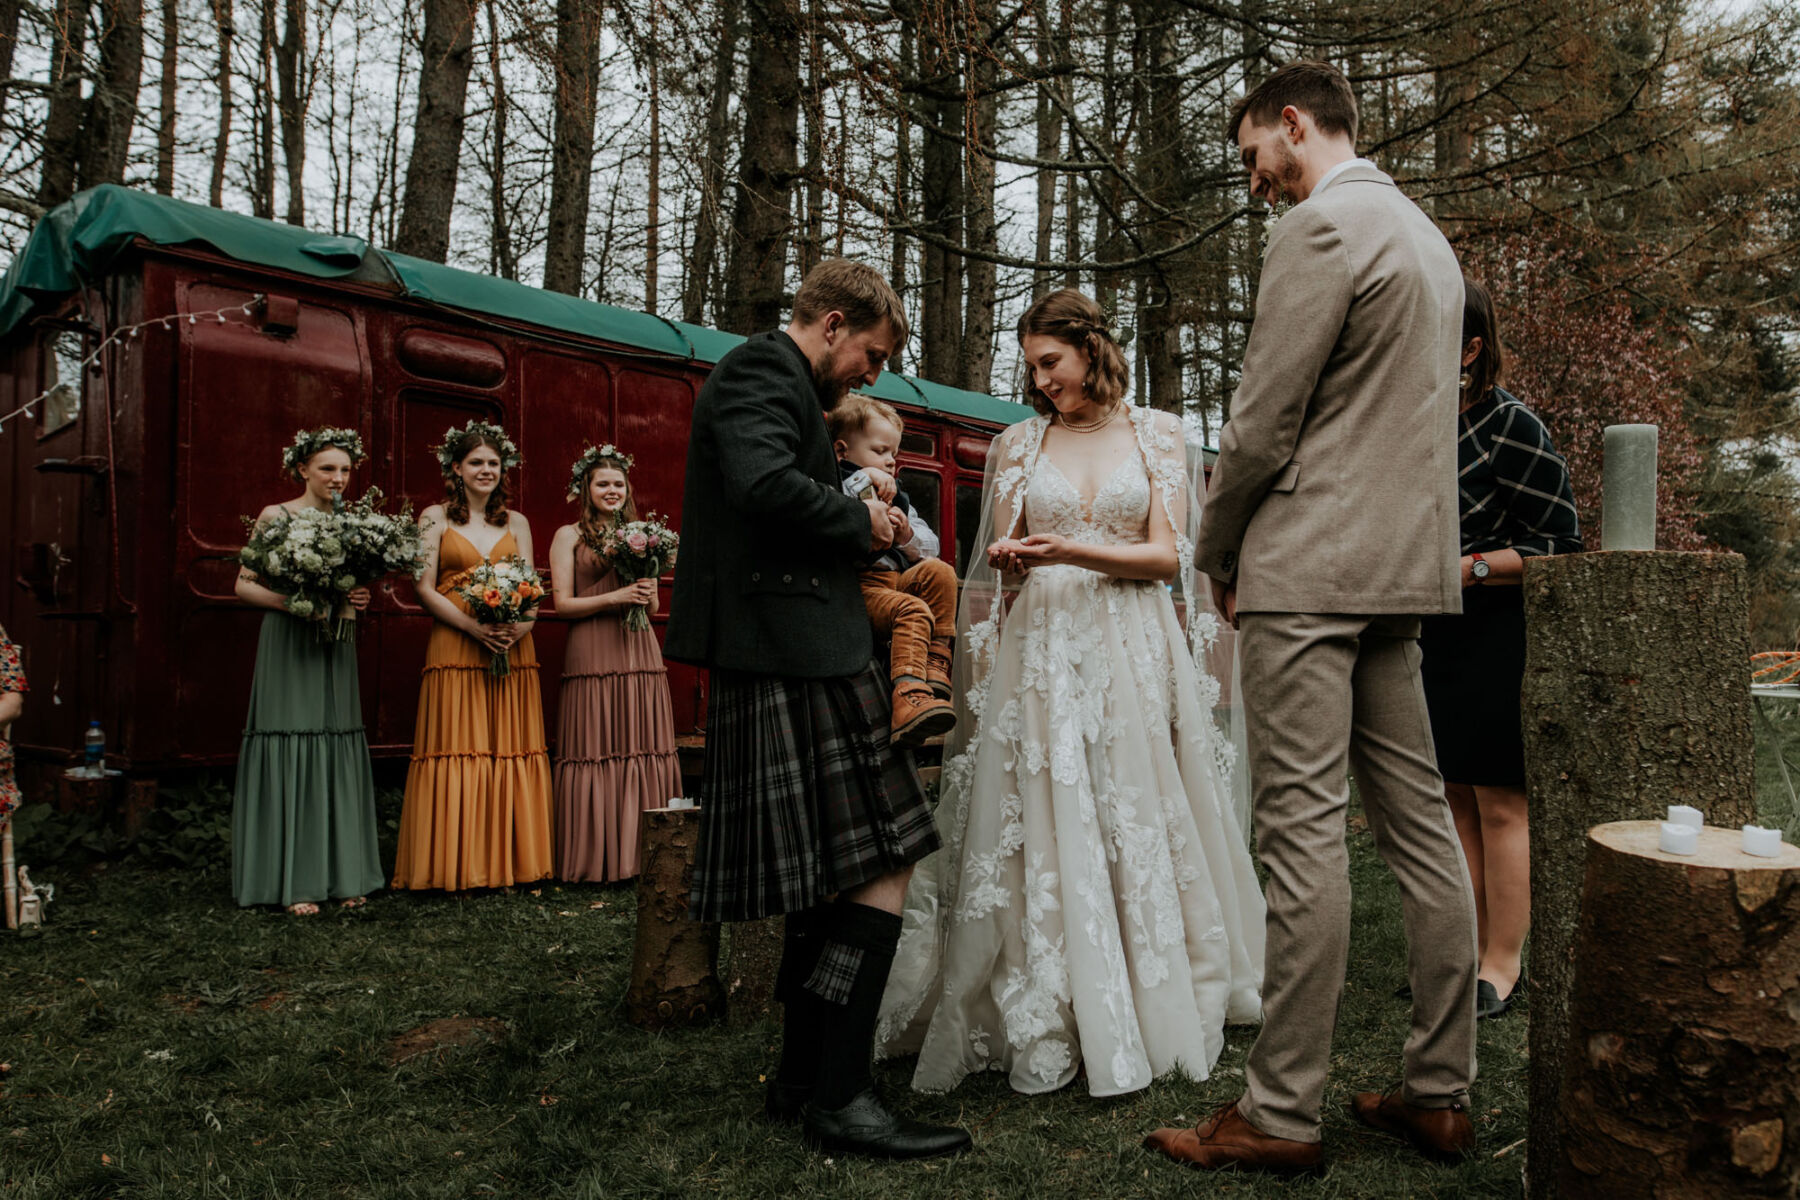 Outdoor wedding ceremony at Aswanley, Aberdeenshire